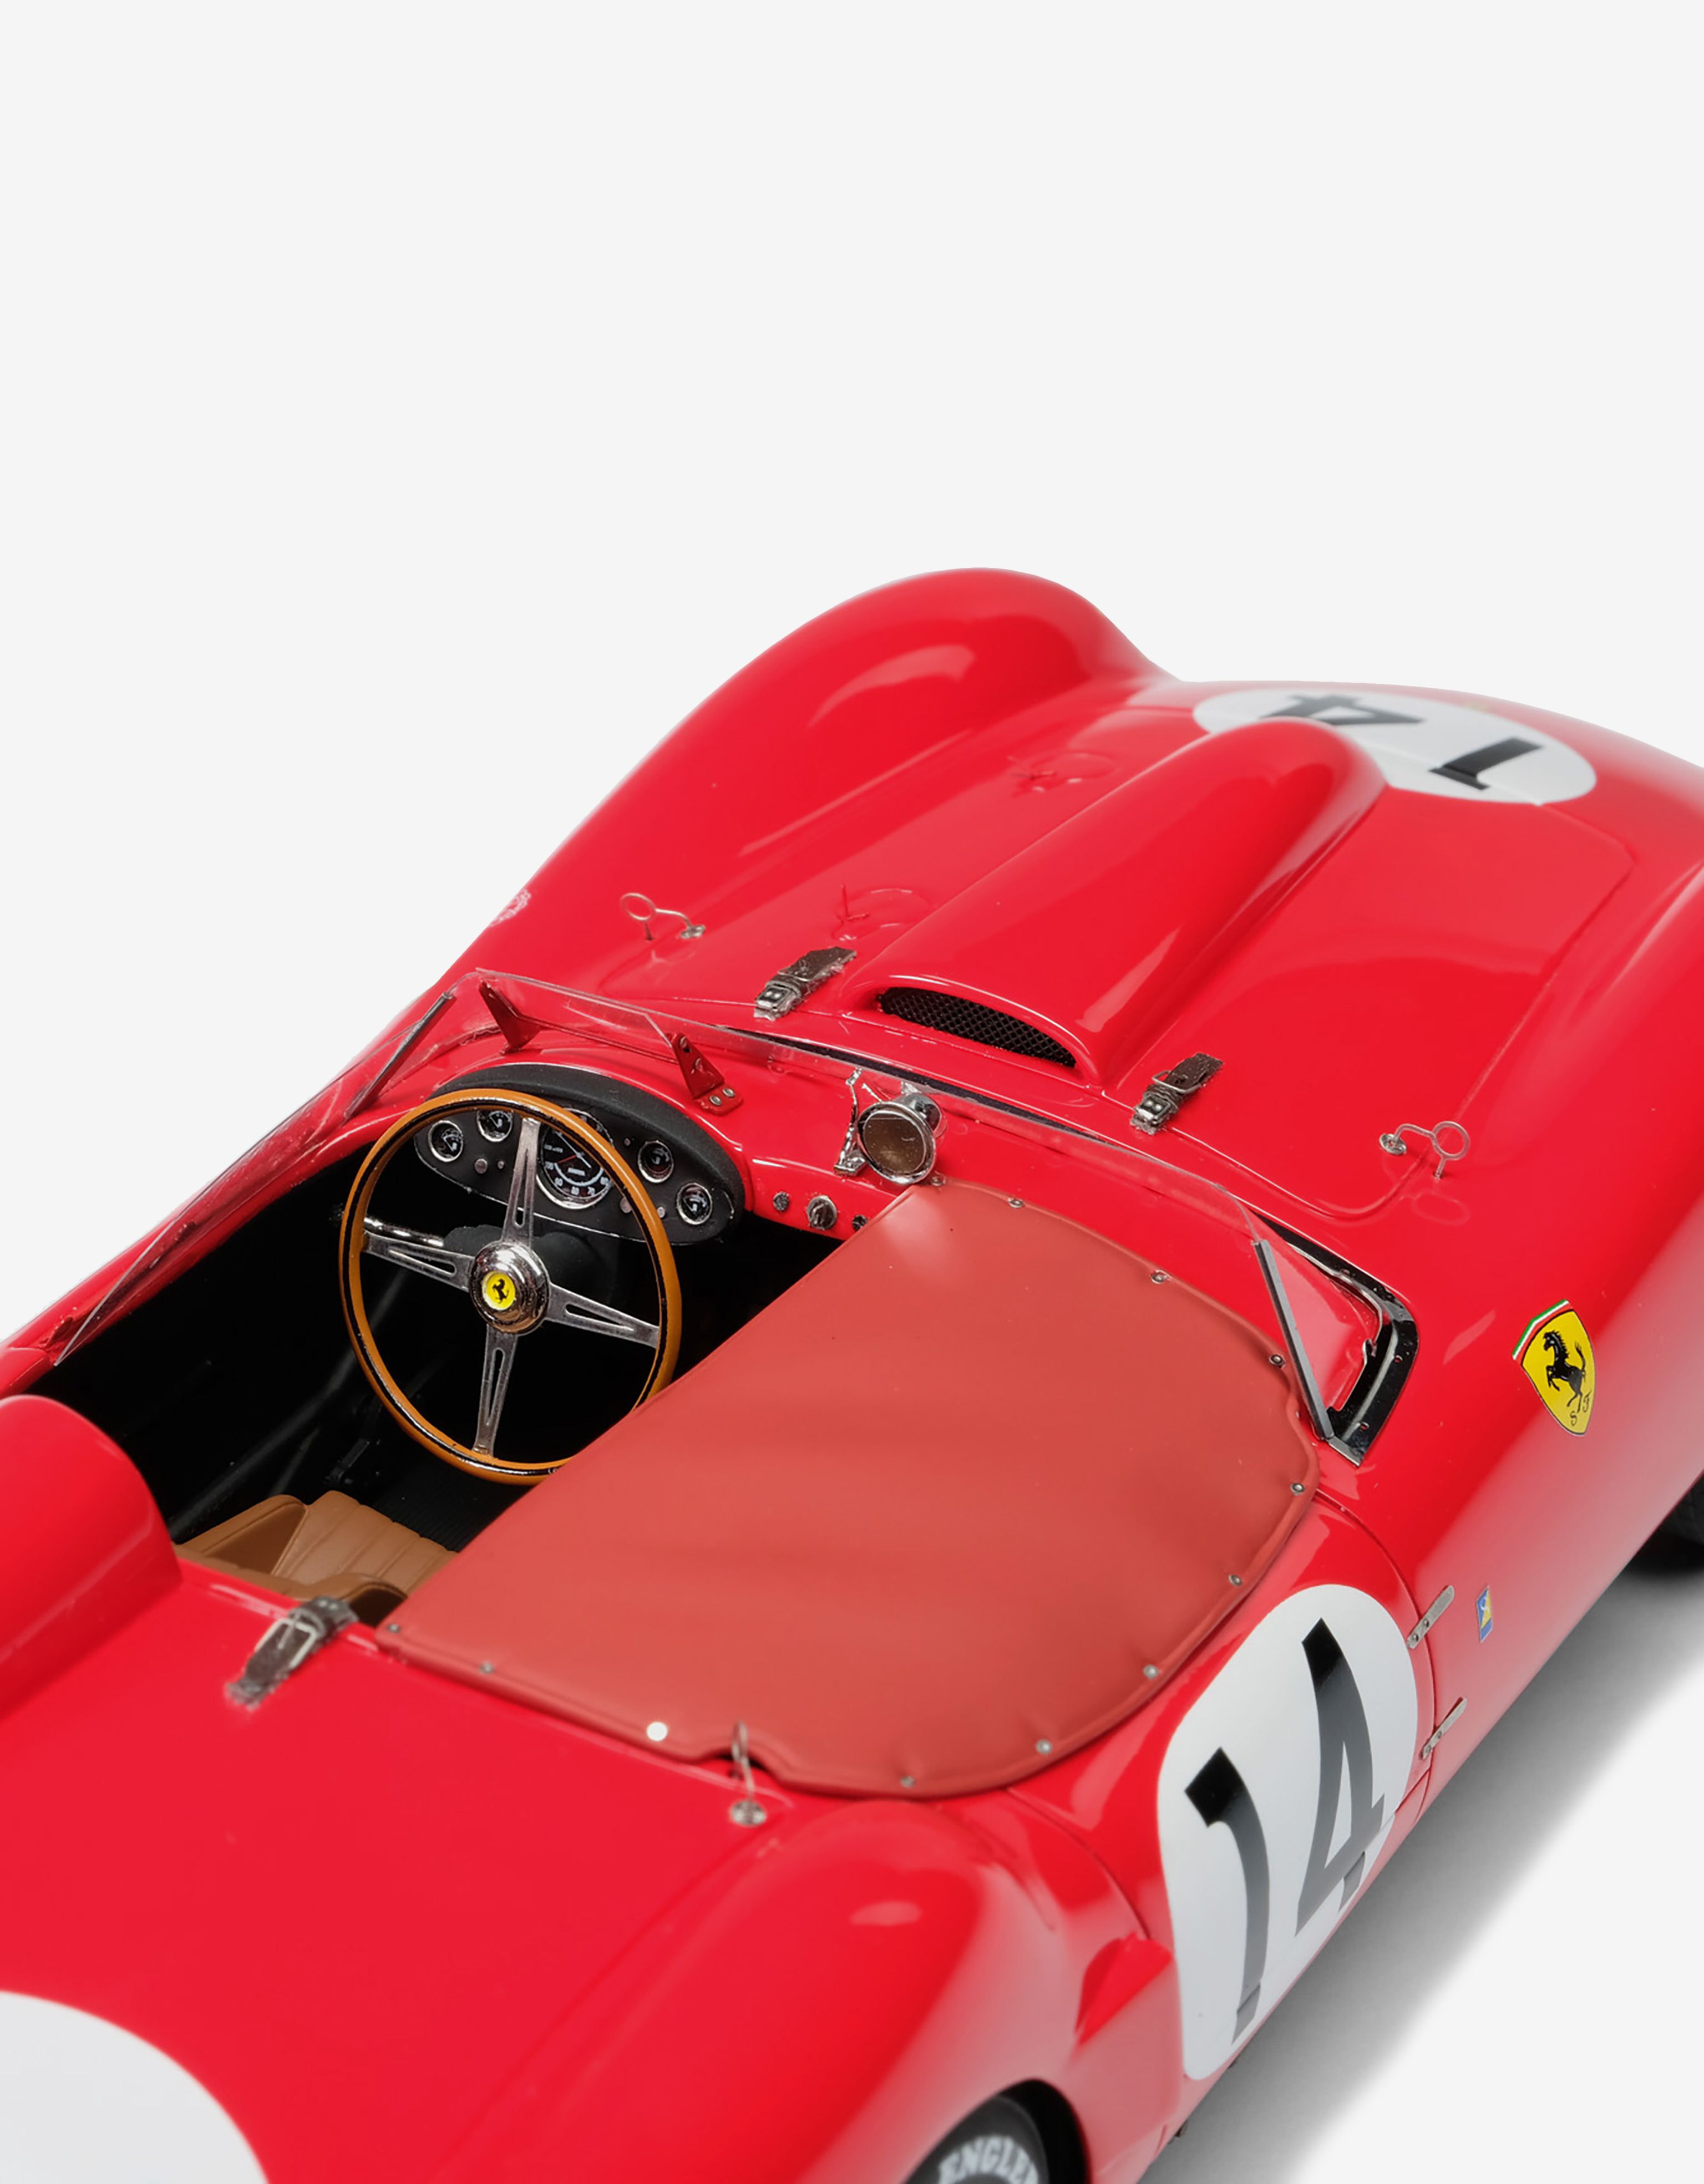 Ferrari Modellauto Ferrari 250 TR 1958 Le Mans im Maßstab 1:18 Rot L7580f